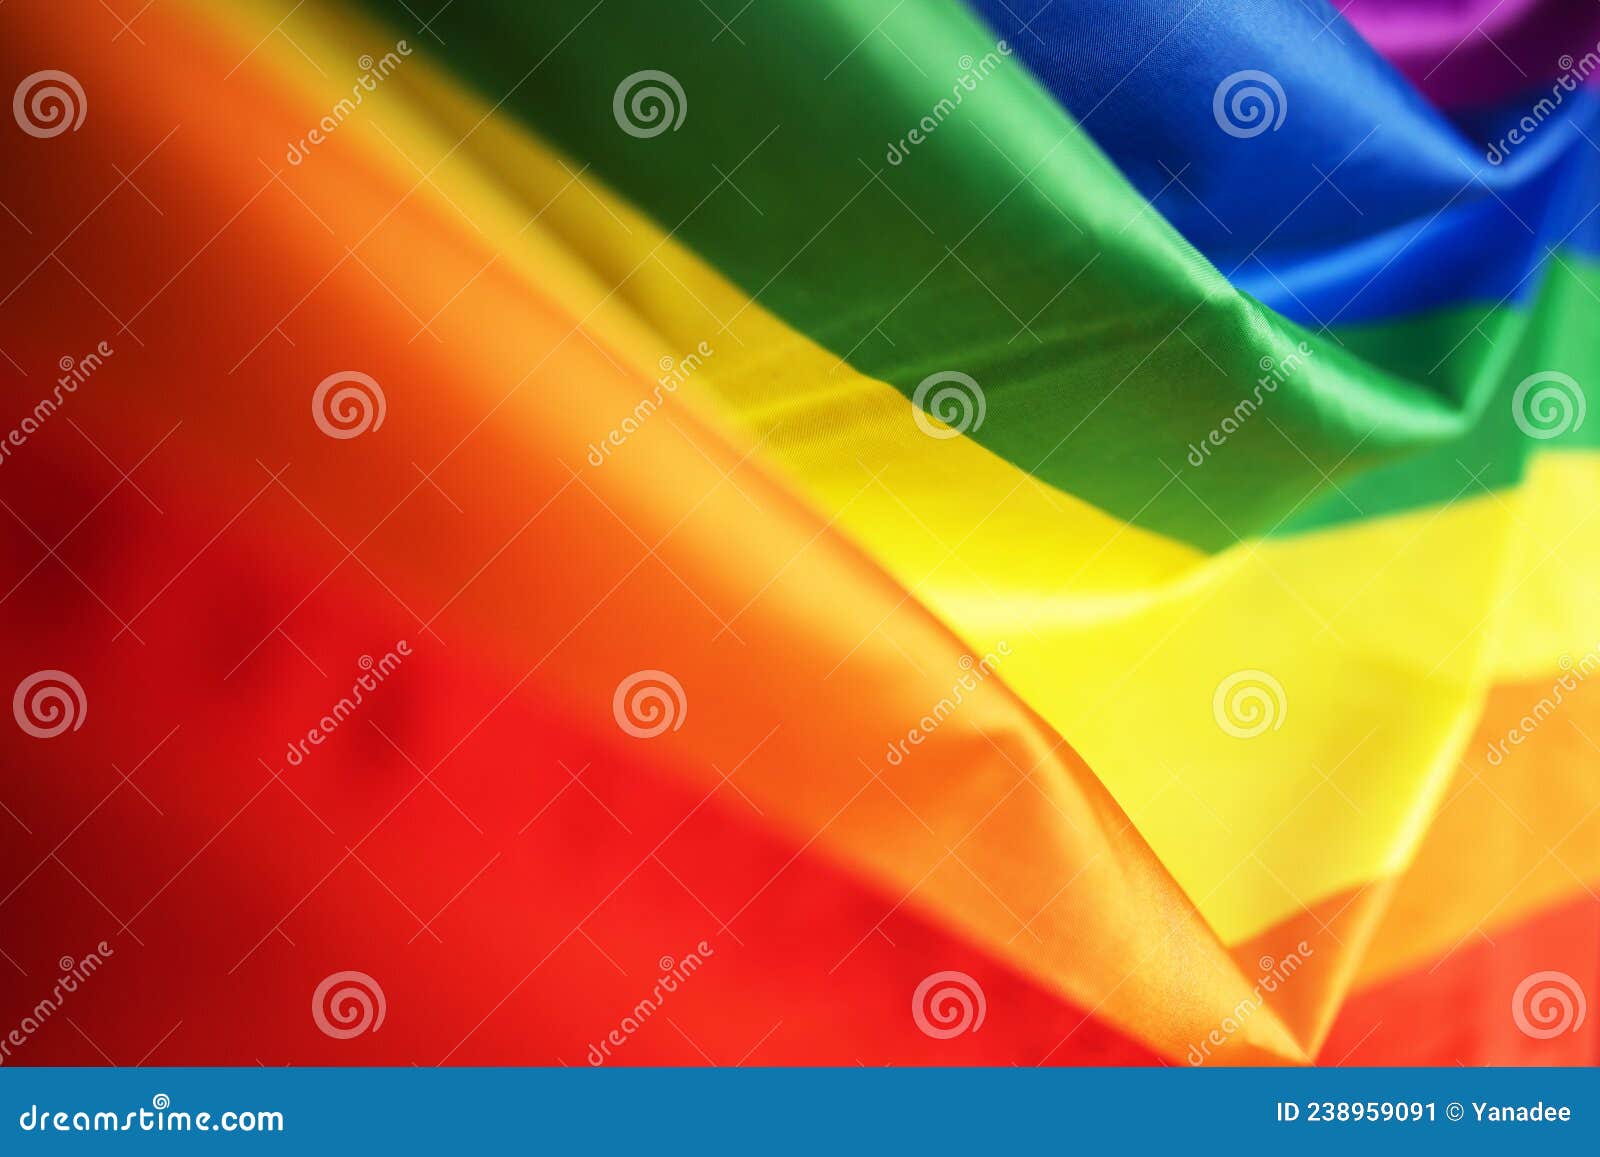 Lgbt Flag Solidarity With Homosexualsagainst Discrimination Sexual Minorities Same Sex